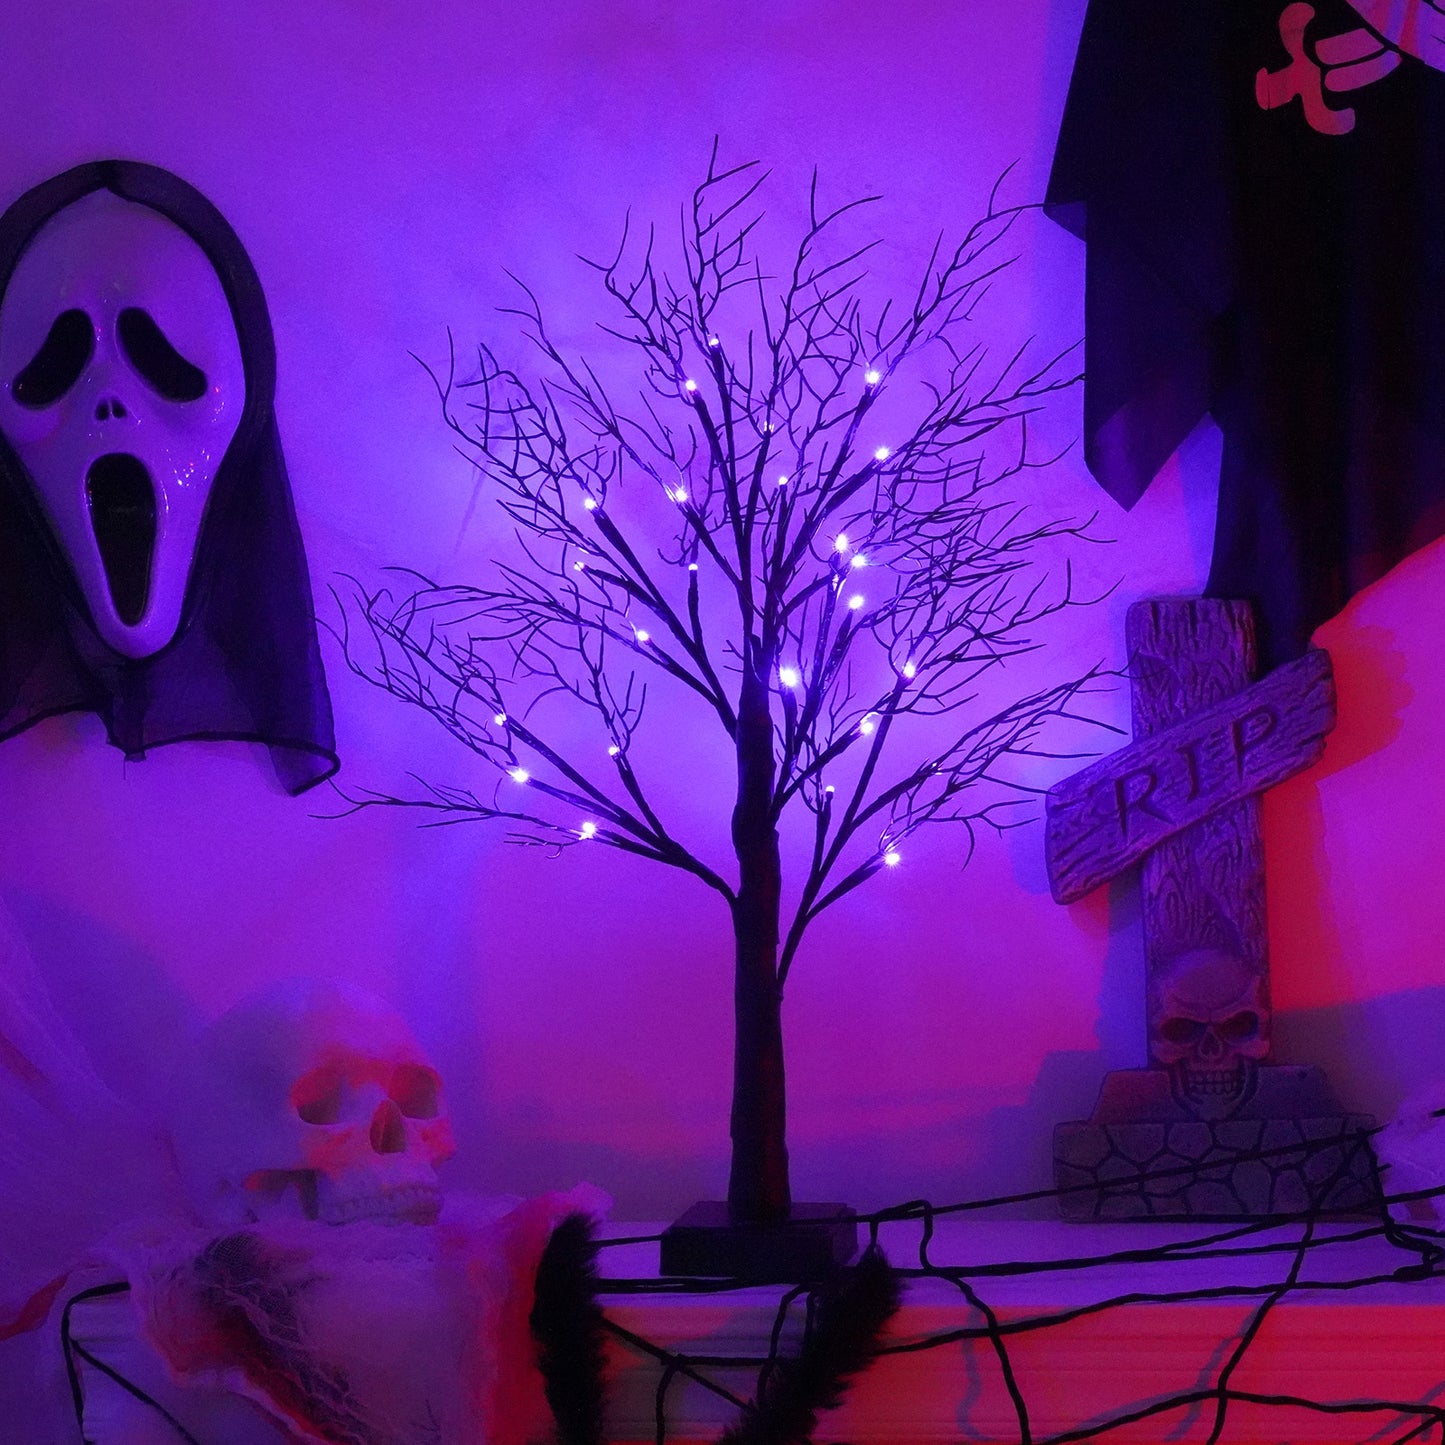 Led Halloween Party Scene Layout Decorative Lights Indoor Decoration